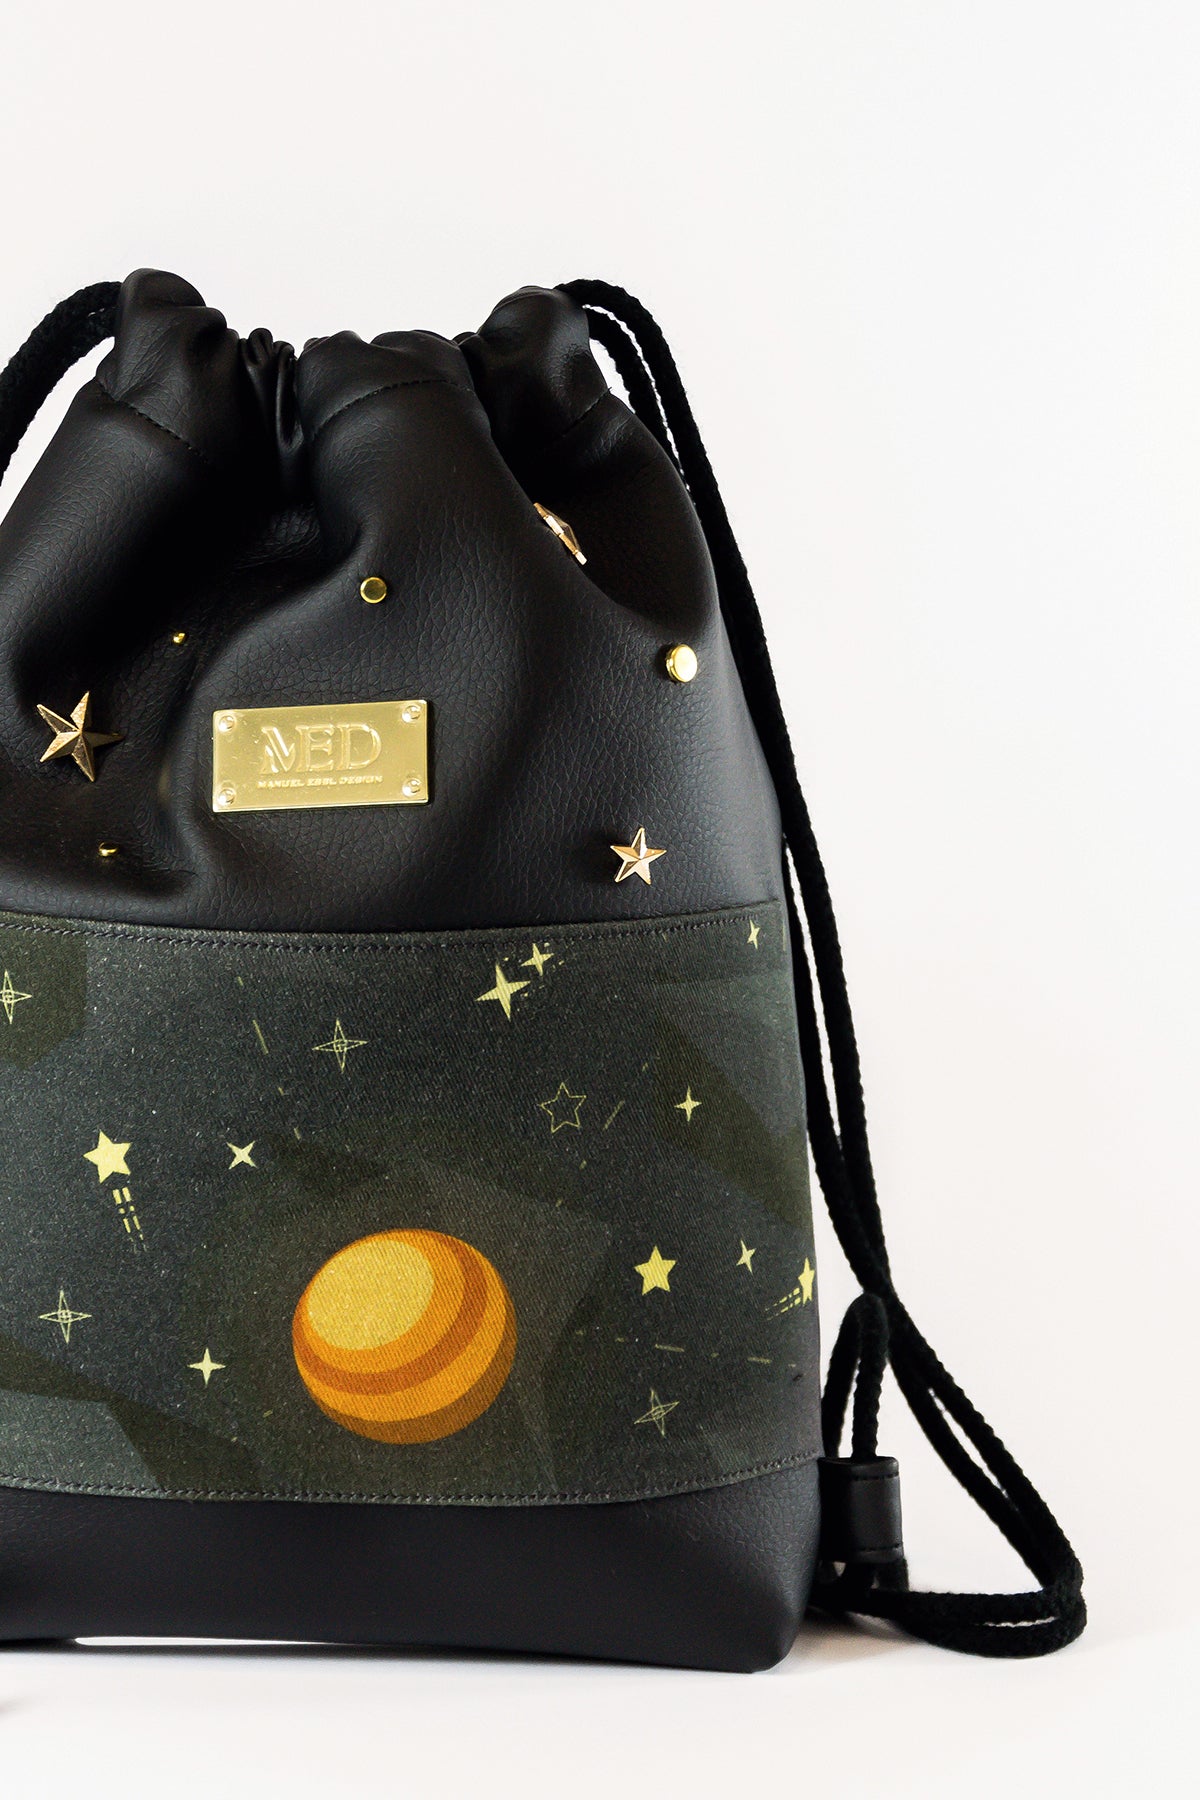 Mini Gym Bag "SPACE" - Black - Manuel Essl Design